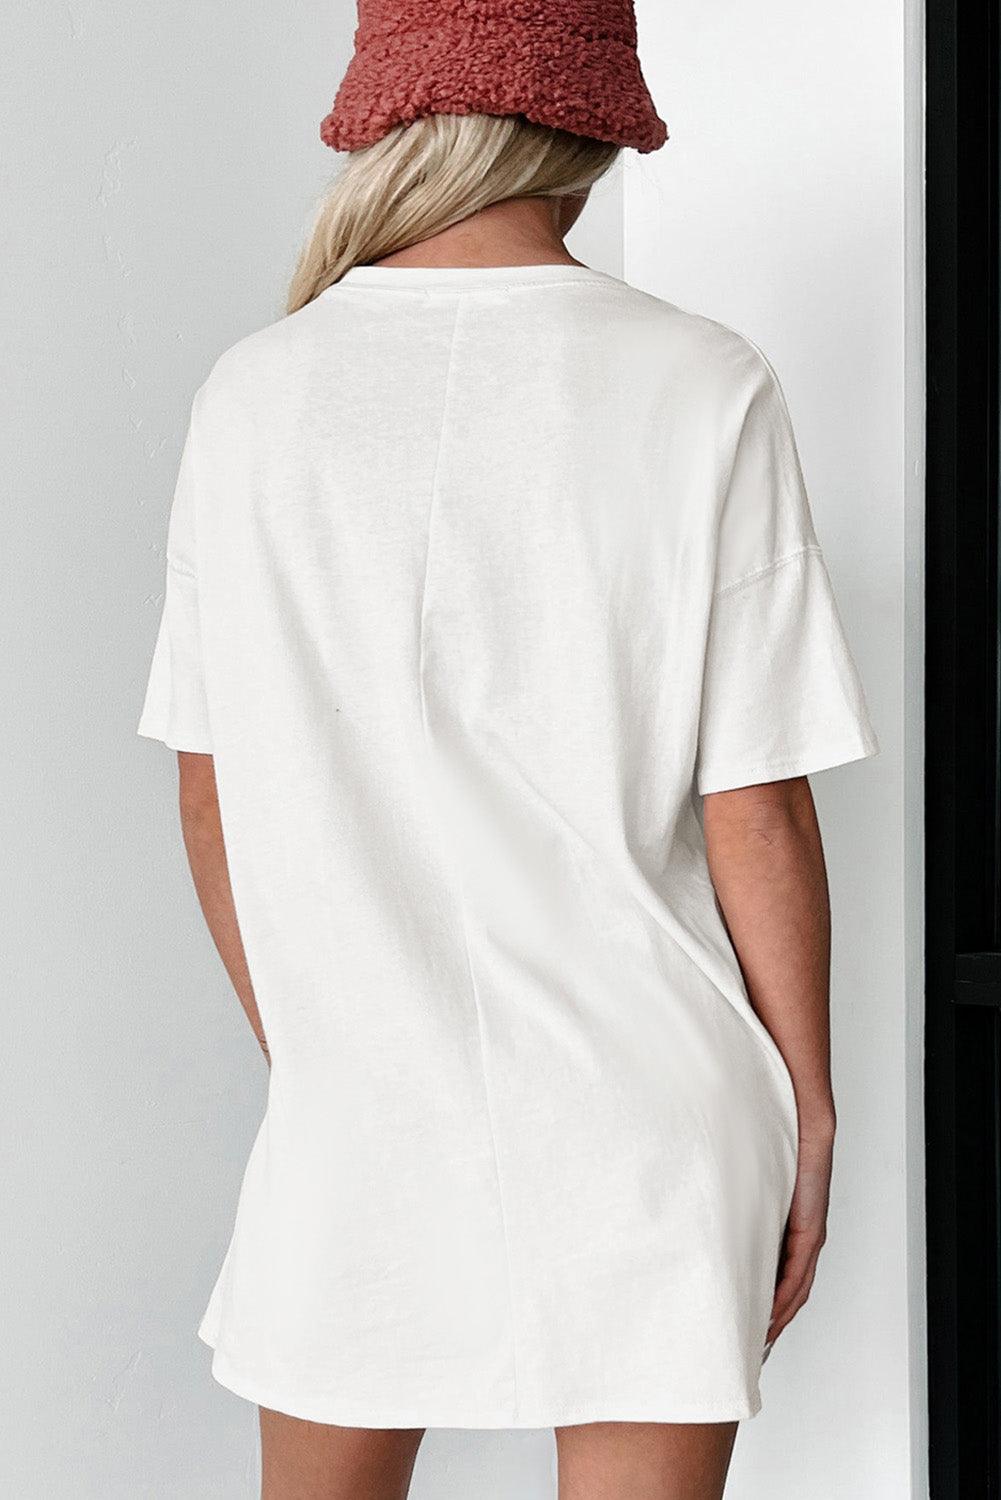 White HOWDY Cheetah Steer Head Print Oversized T Shirt - L & M Kee, LLC